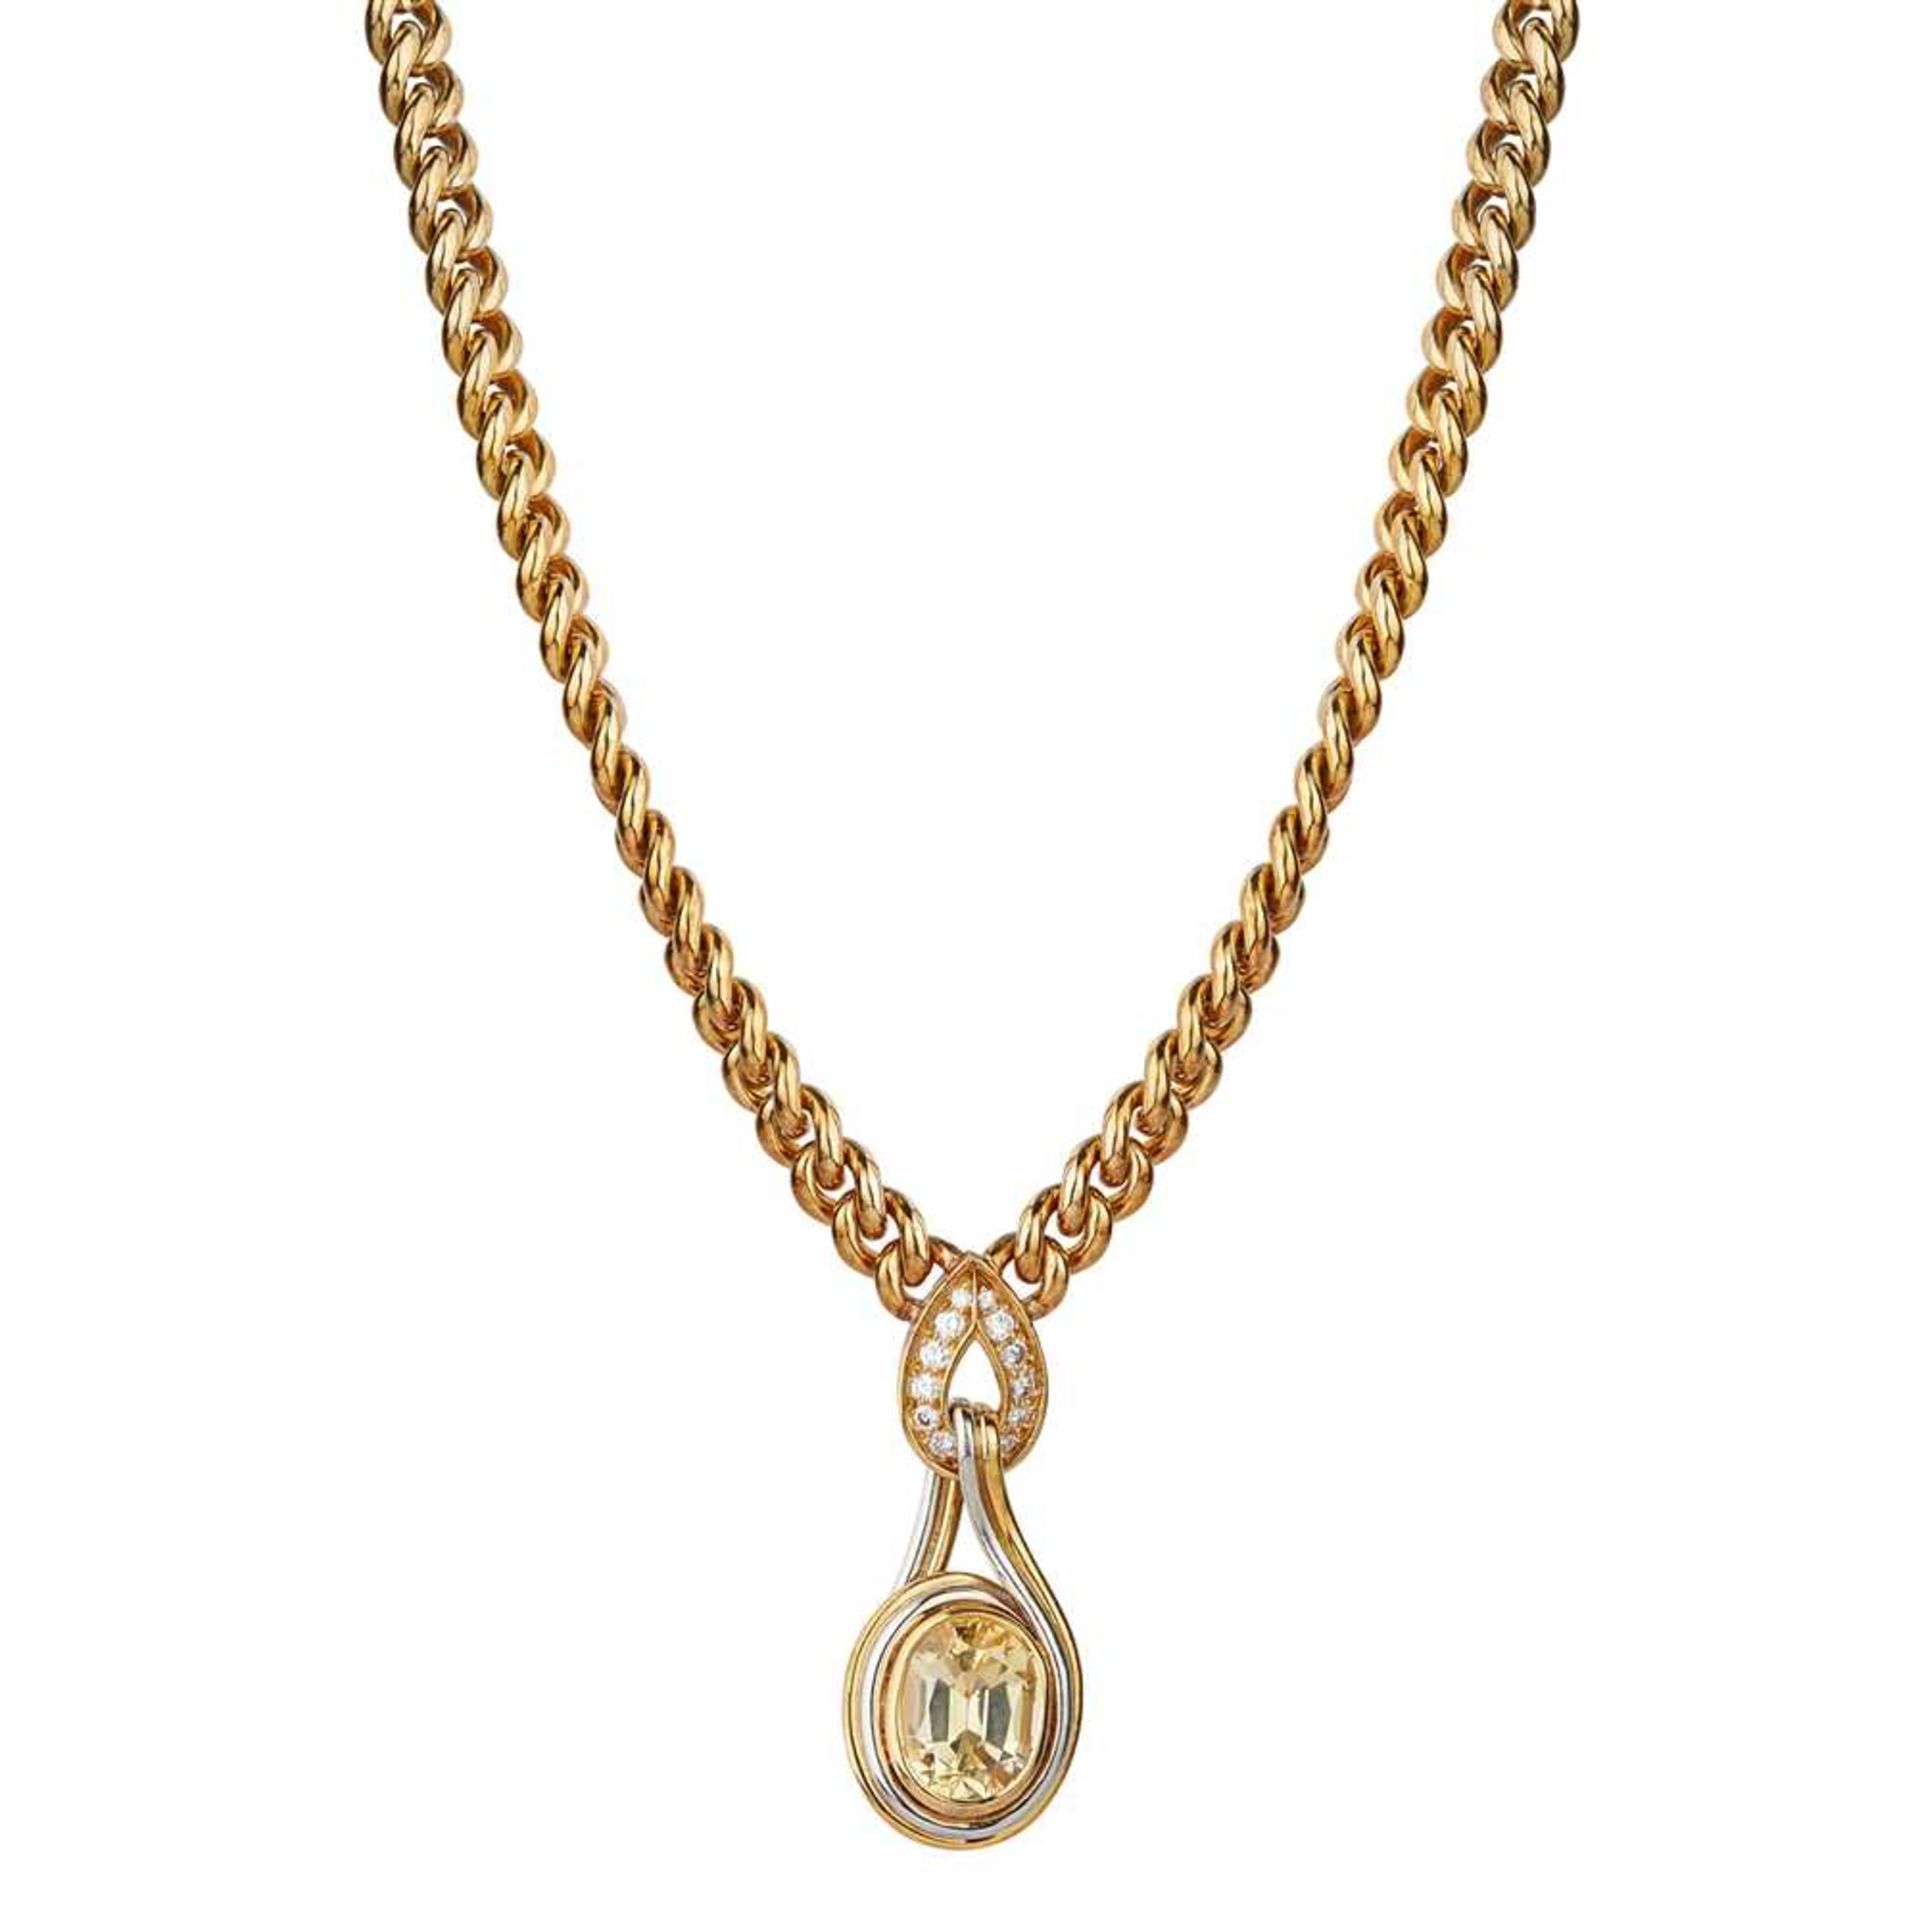 A yellow sapphire and diamond set necklace, Bulgari